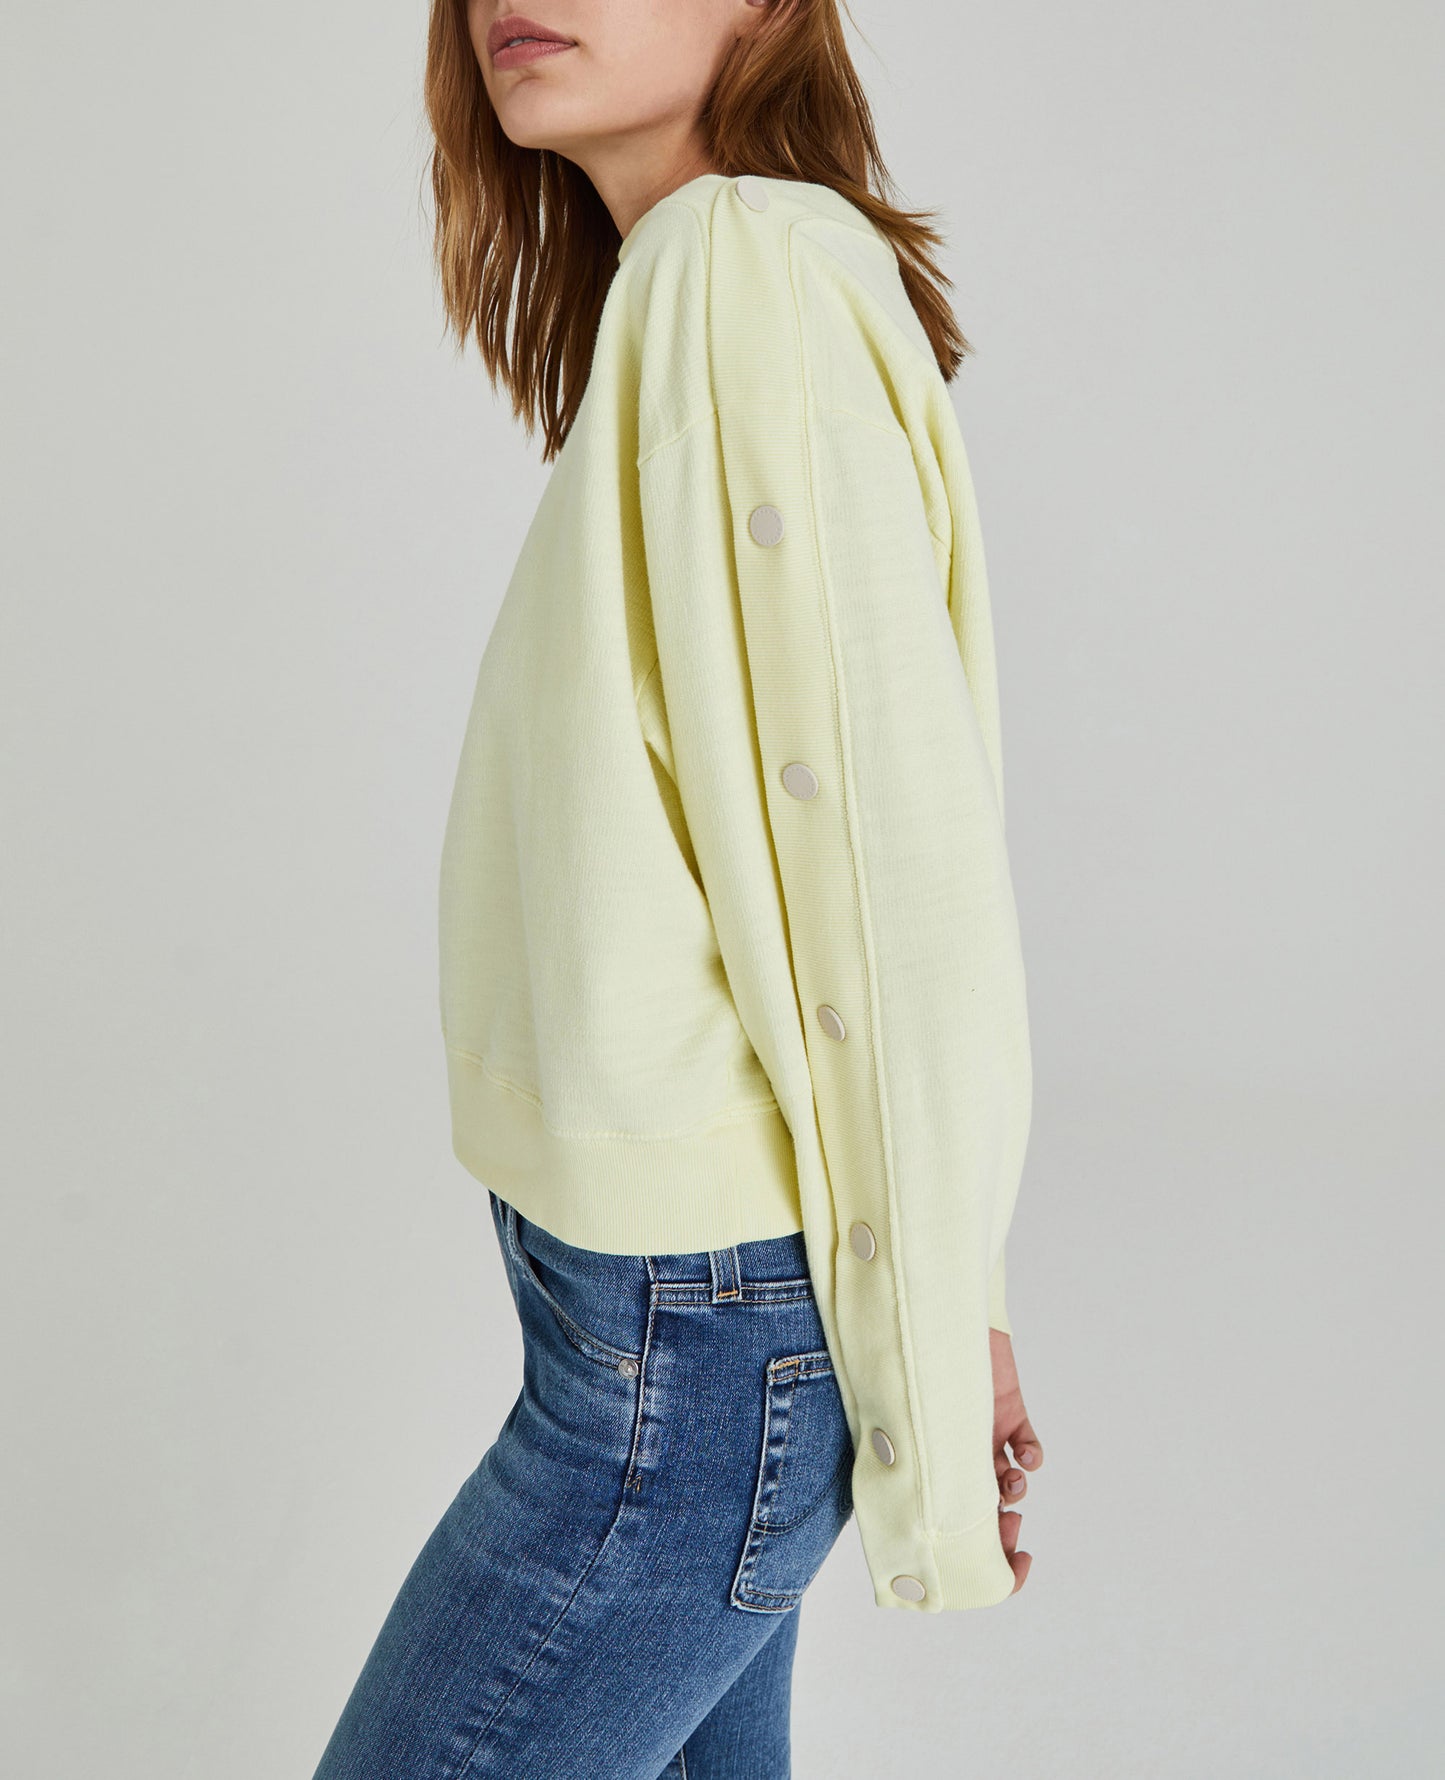 Cyra Sweatshirt Citrus Mist Snap Button Sweatshirt Women Tops Photo 4